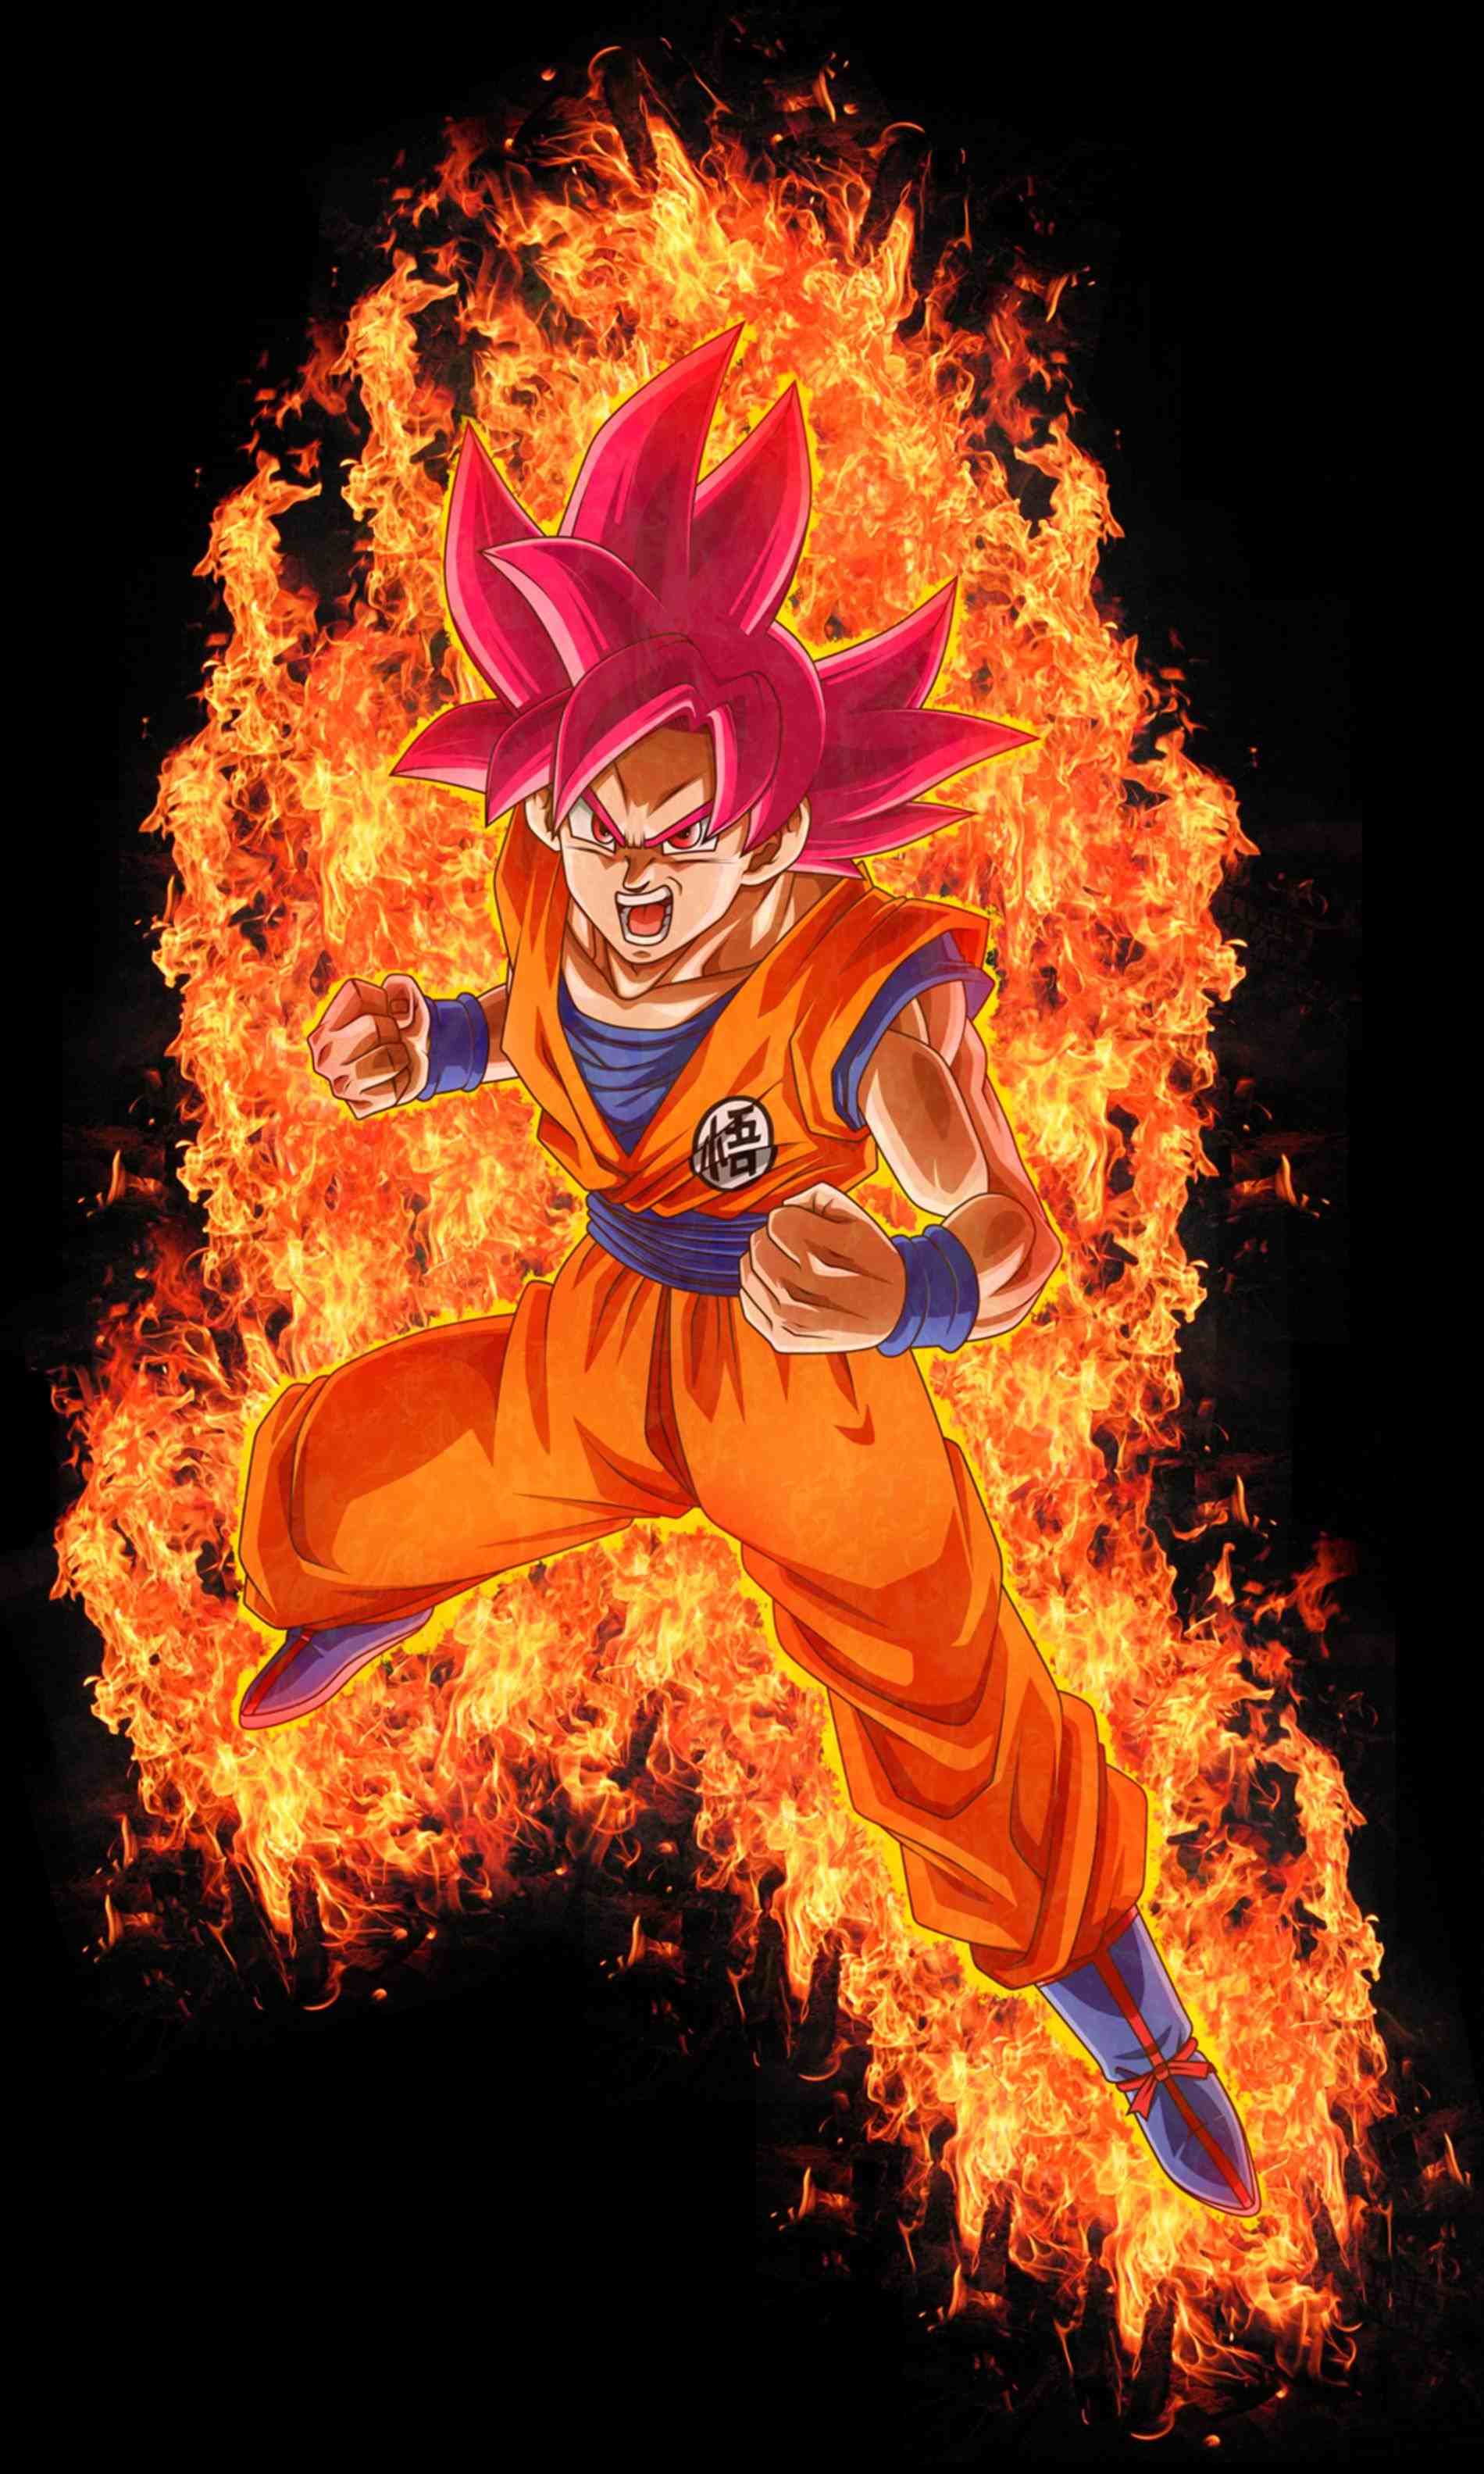 Goku Super Saiyan God Wallpaper, image collections of wallpaper